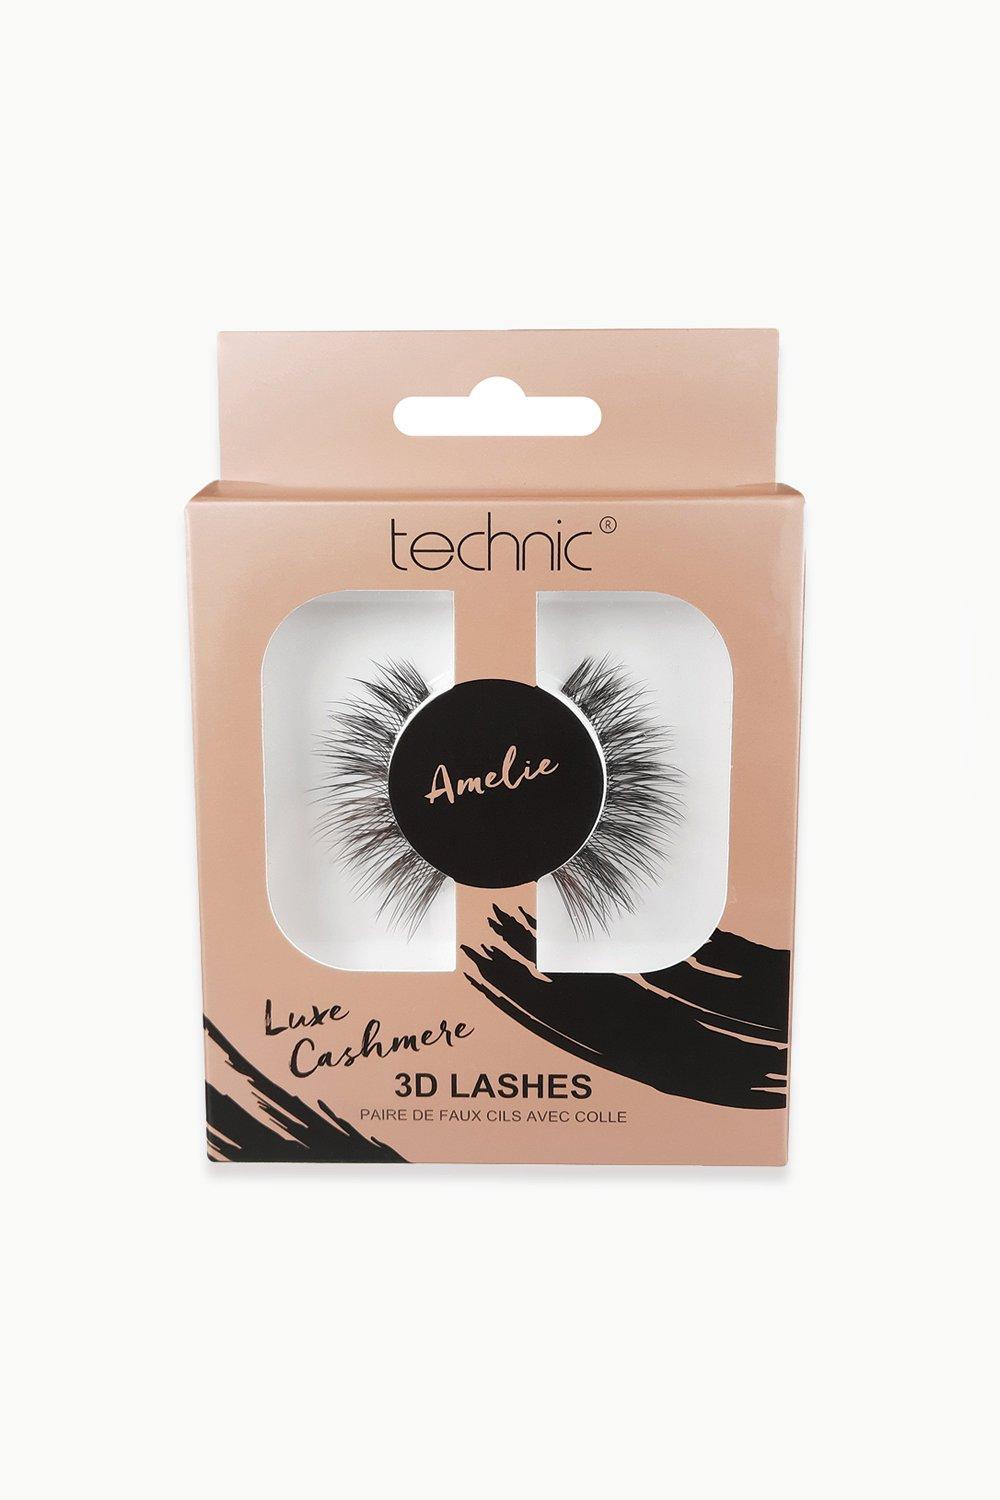 Technic Luxe Cashmere Lashes - Amelie, Black